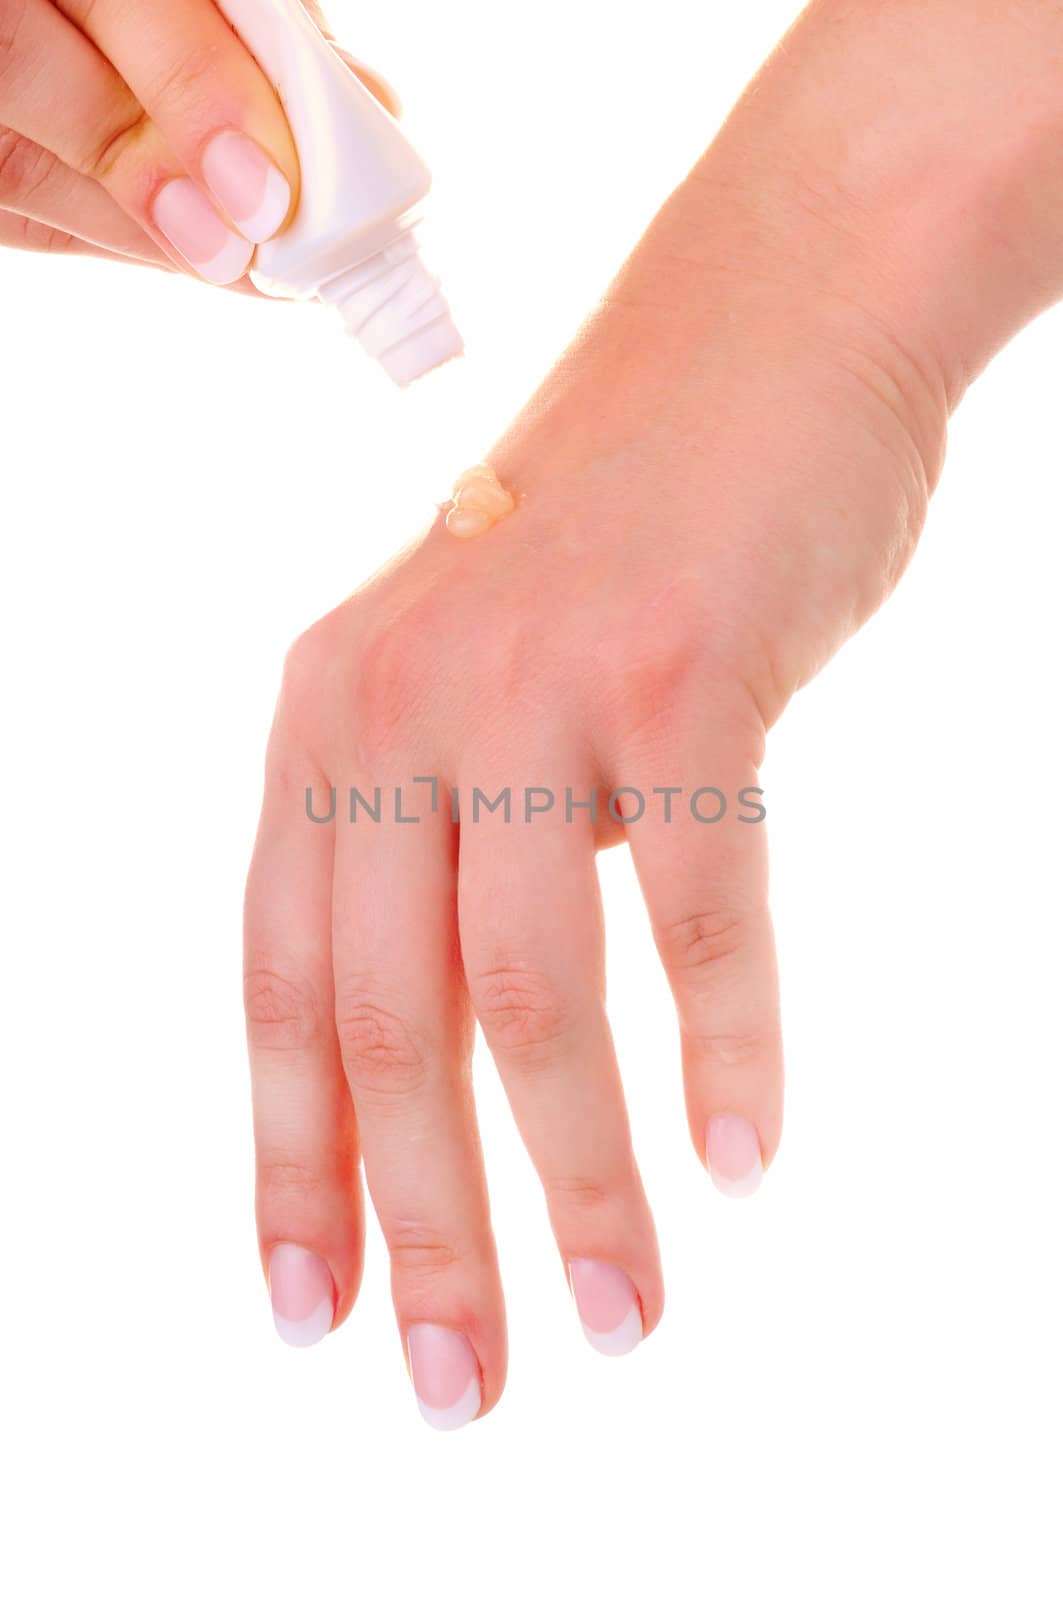 Hands cream applying on white background